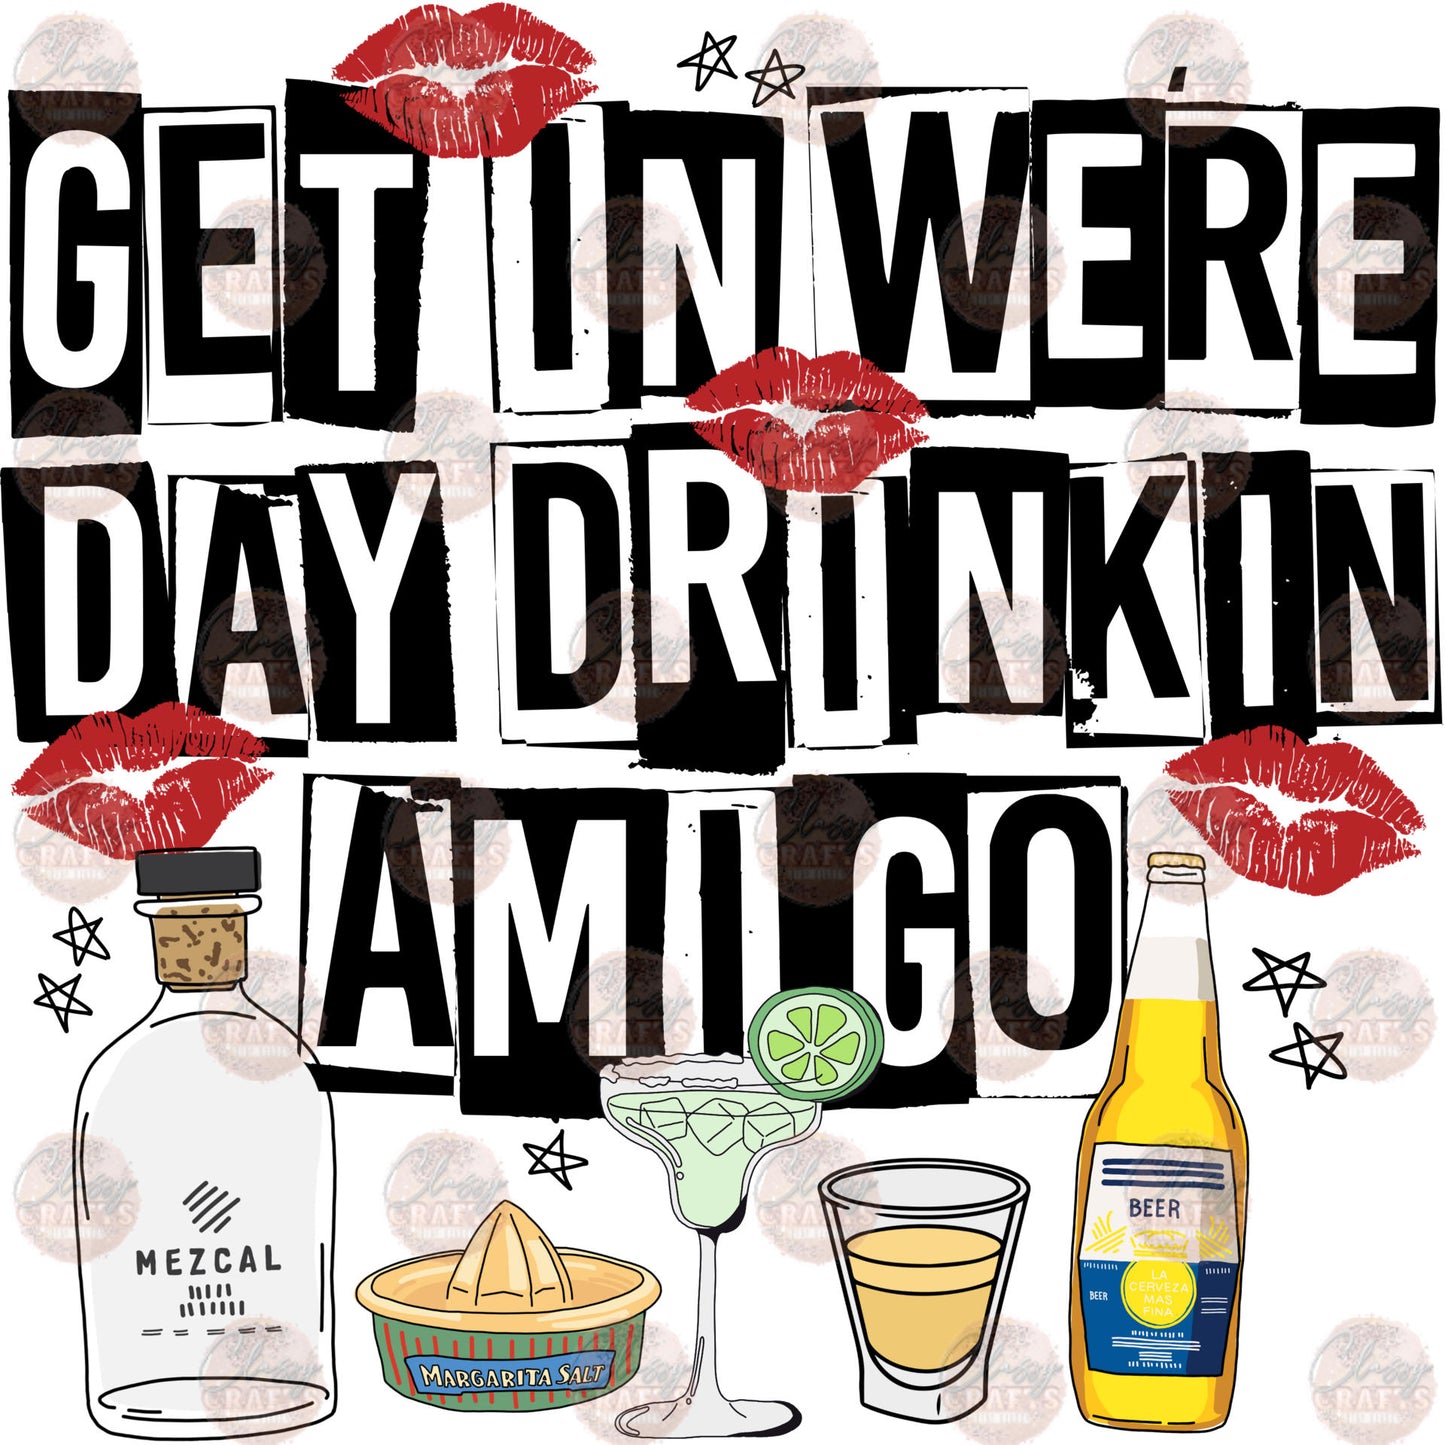 Get In We're Day Drinkin Amigo - Sublimation Transfer